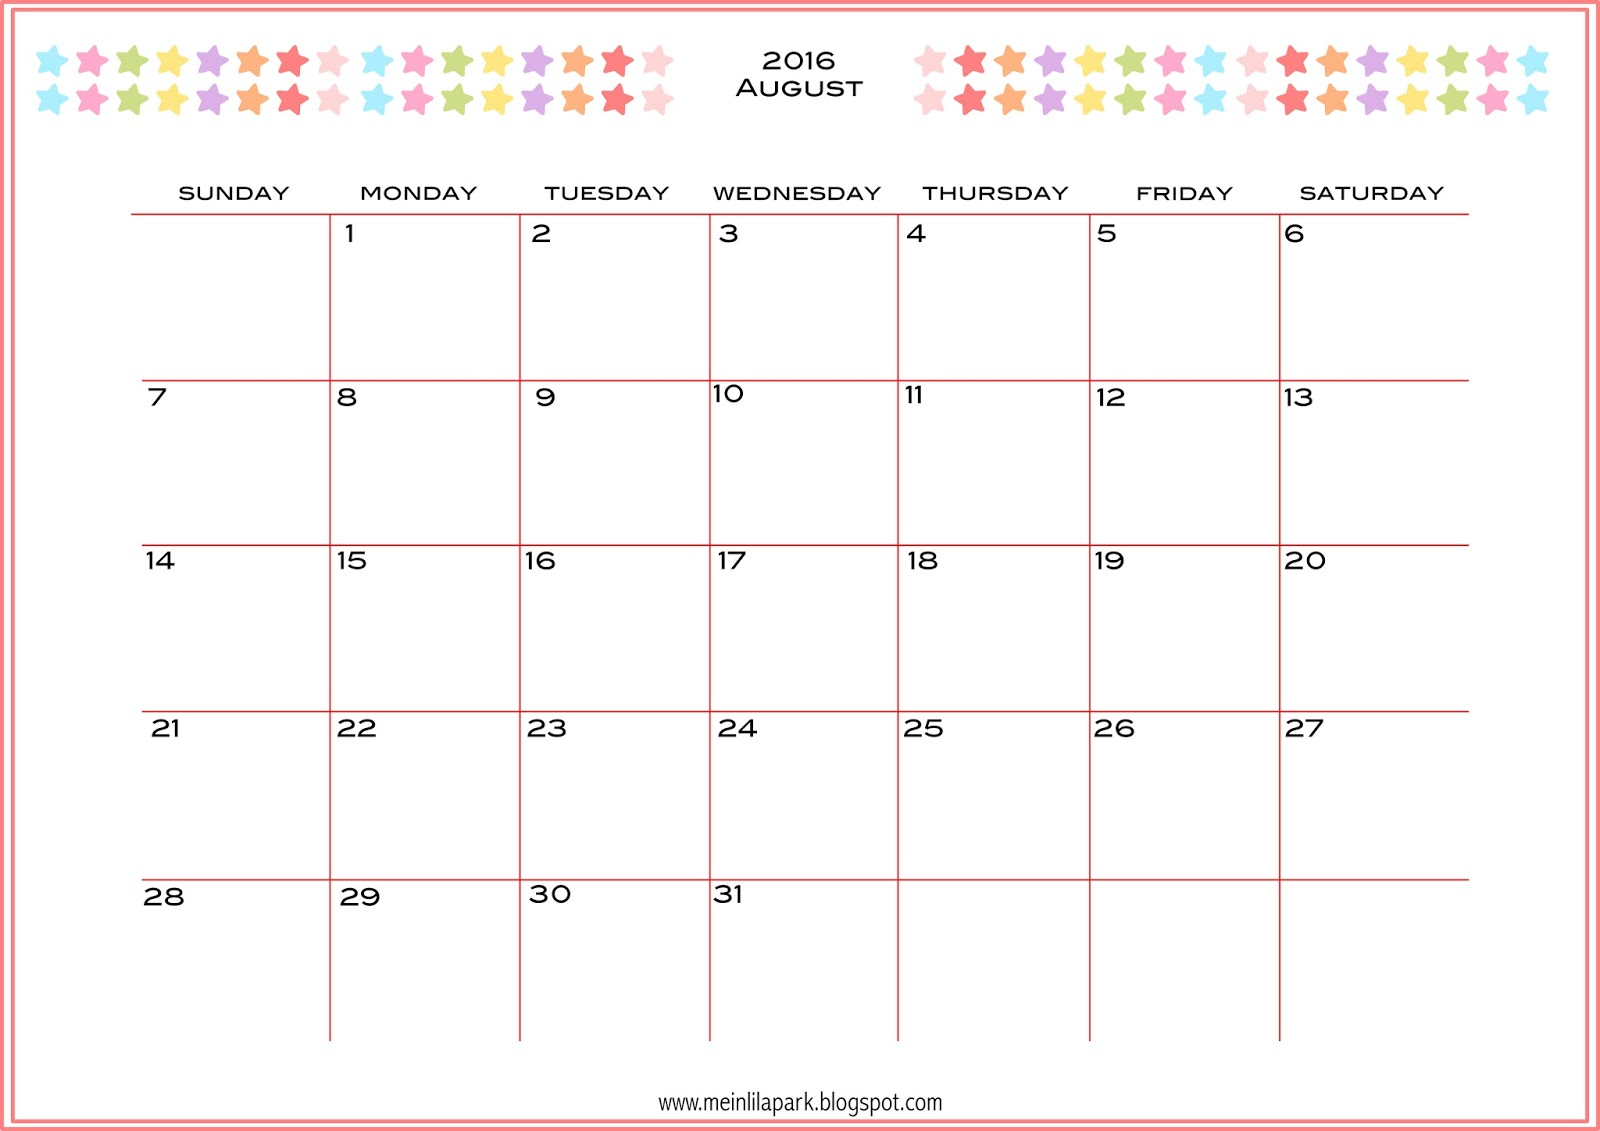 Free Printable 2016 Monthly Planner Calendar Part 2 